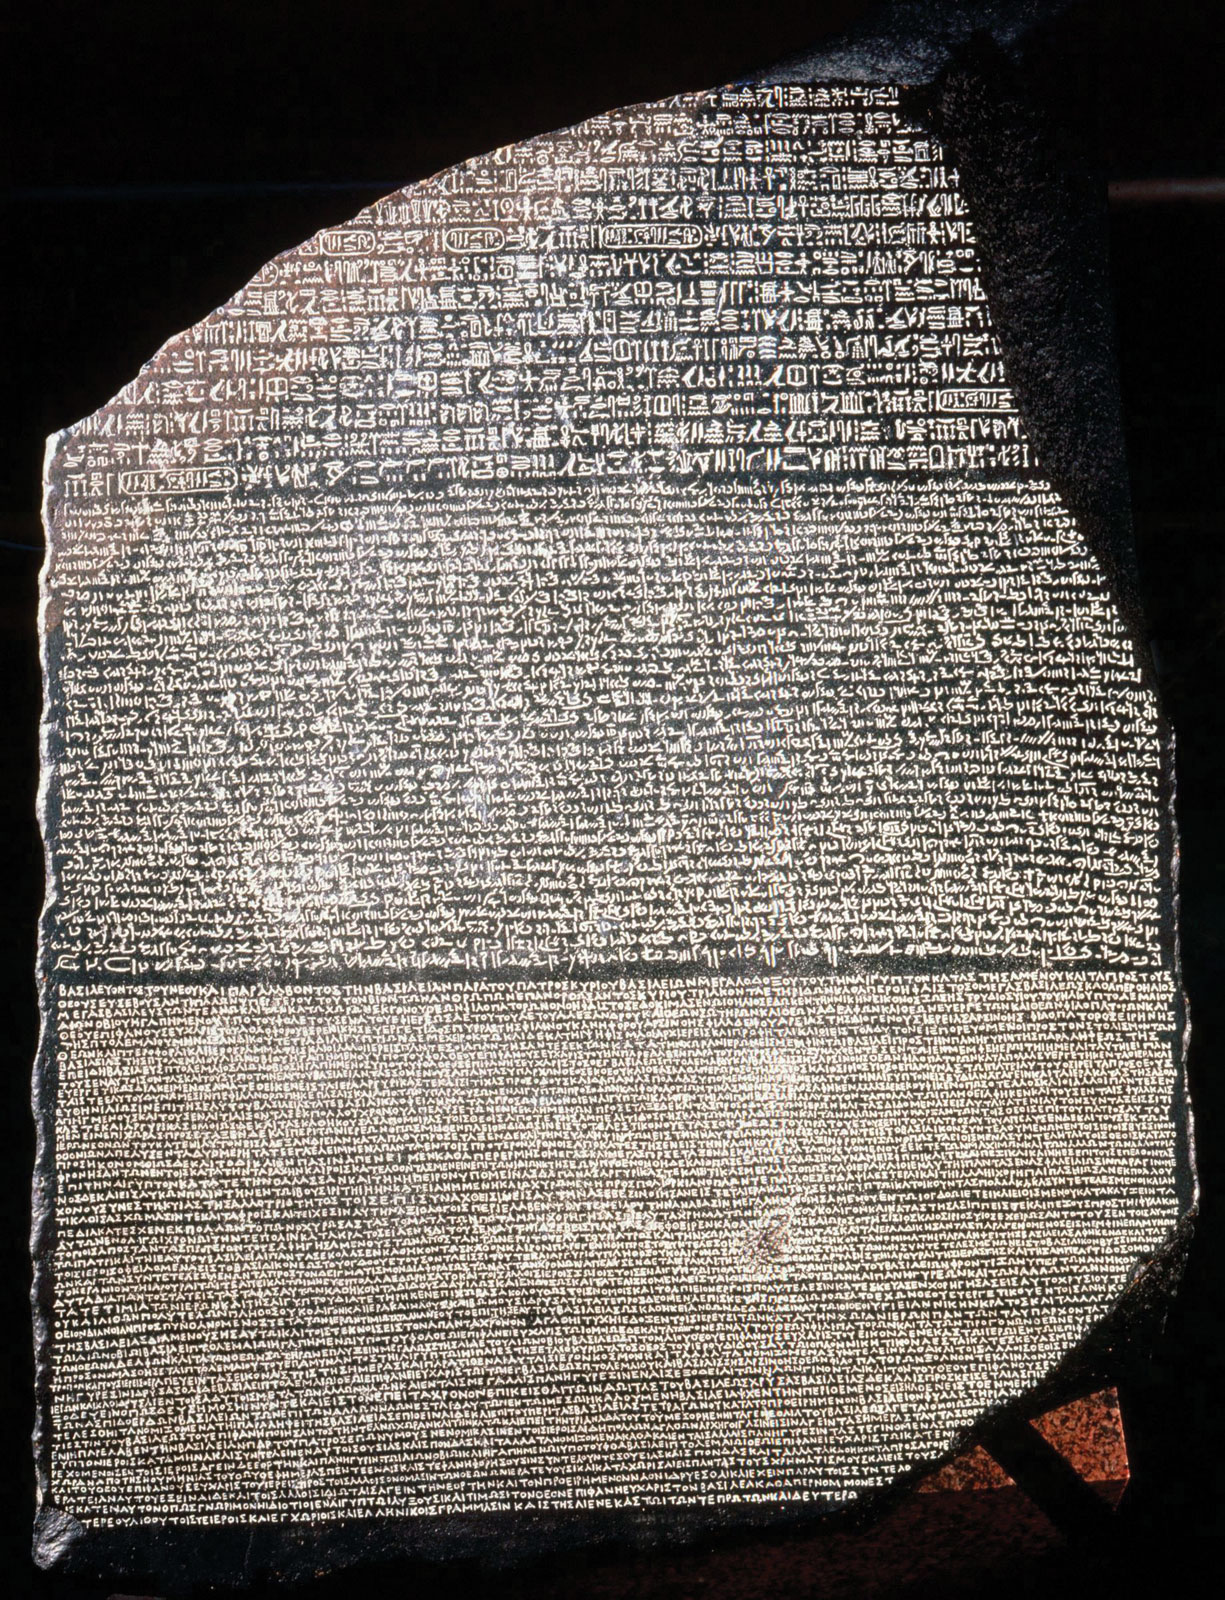 The Rosetta Stone basalt slab from Fort Saint-Julien Egypt 196 BC in the British Museum London